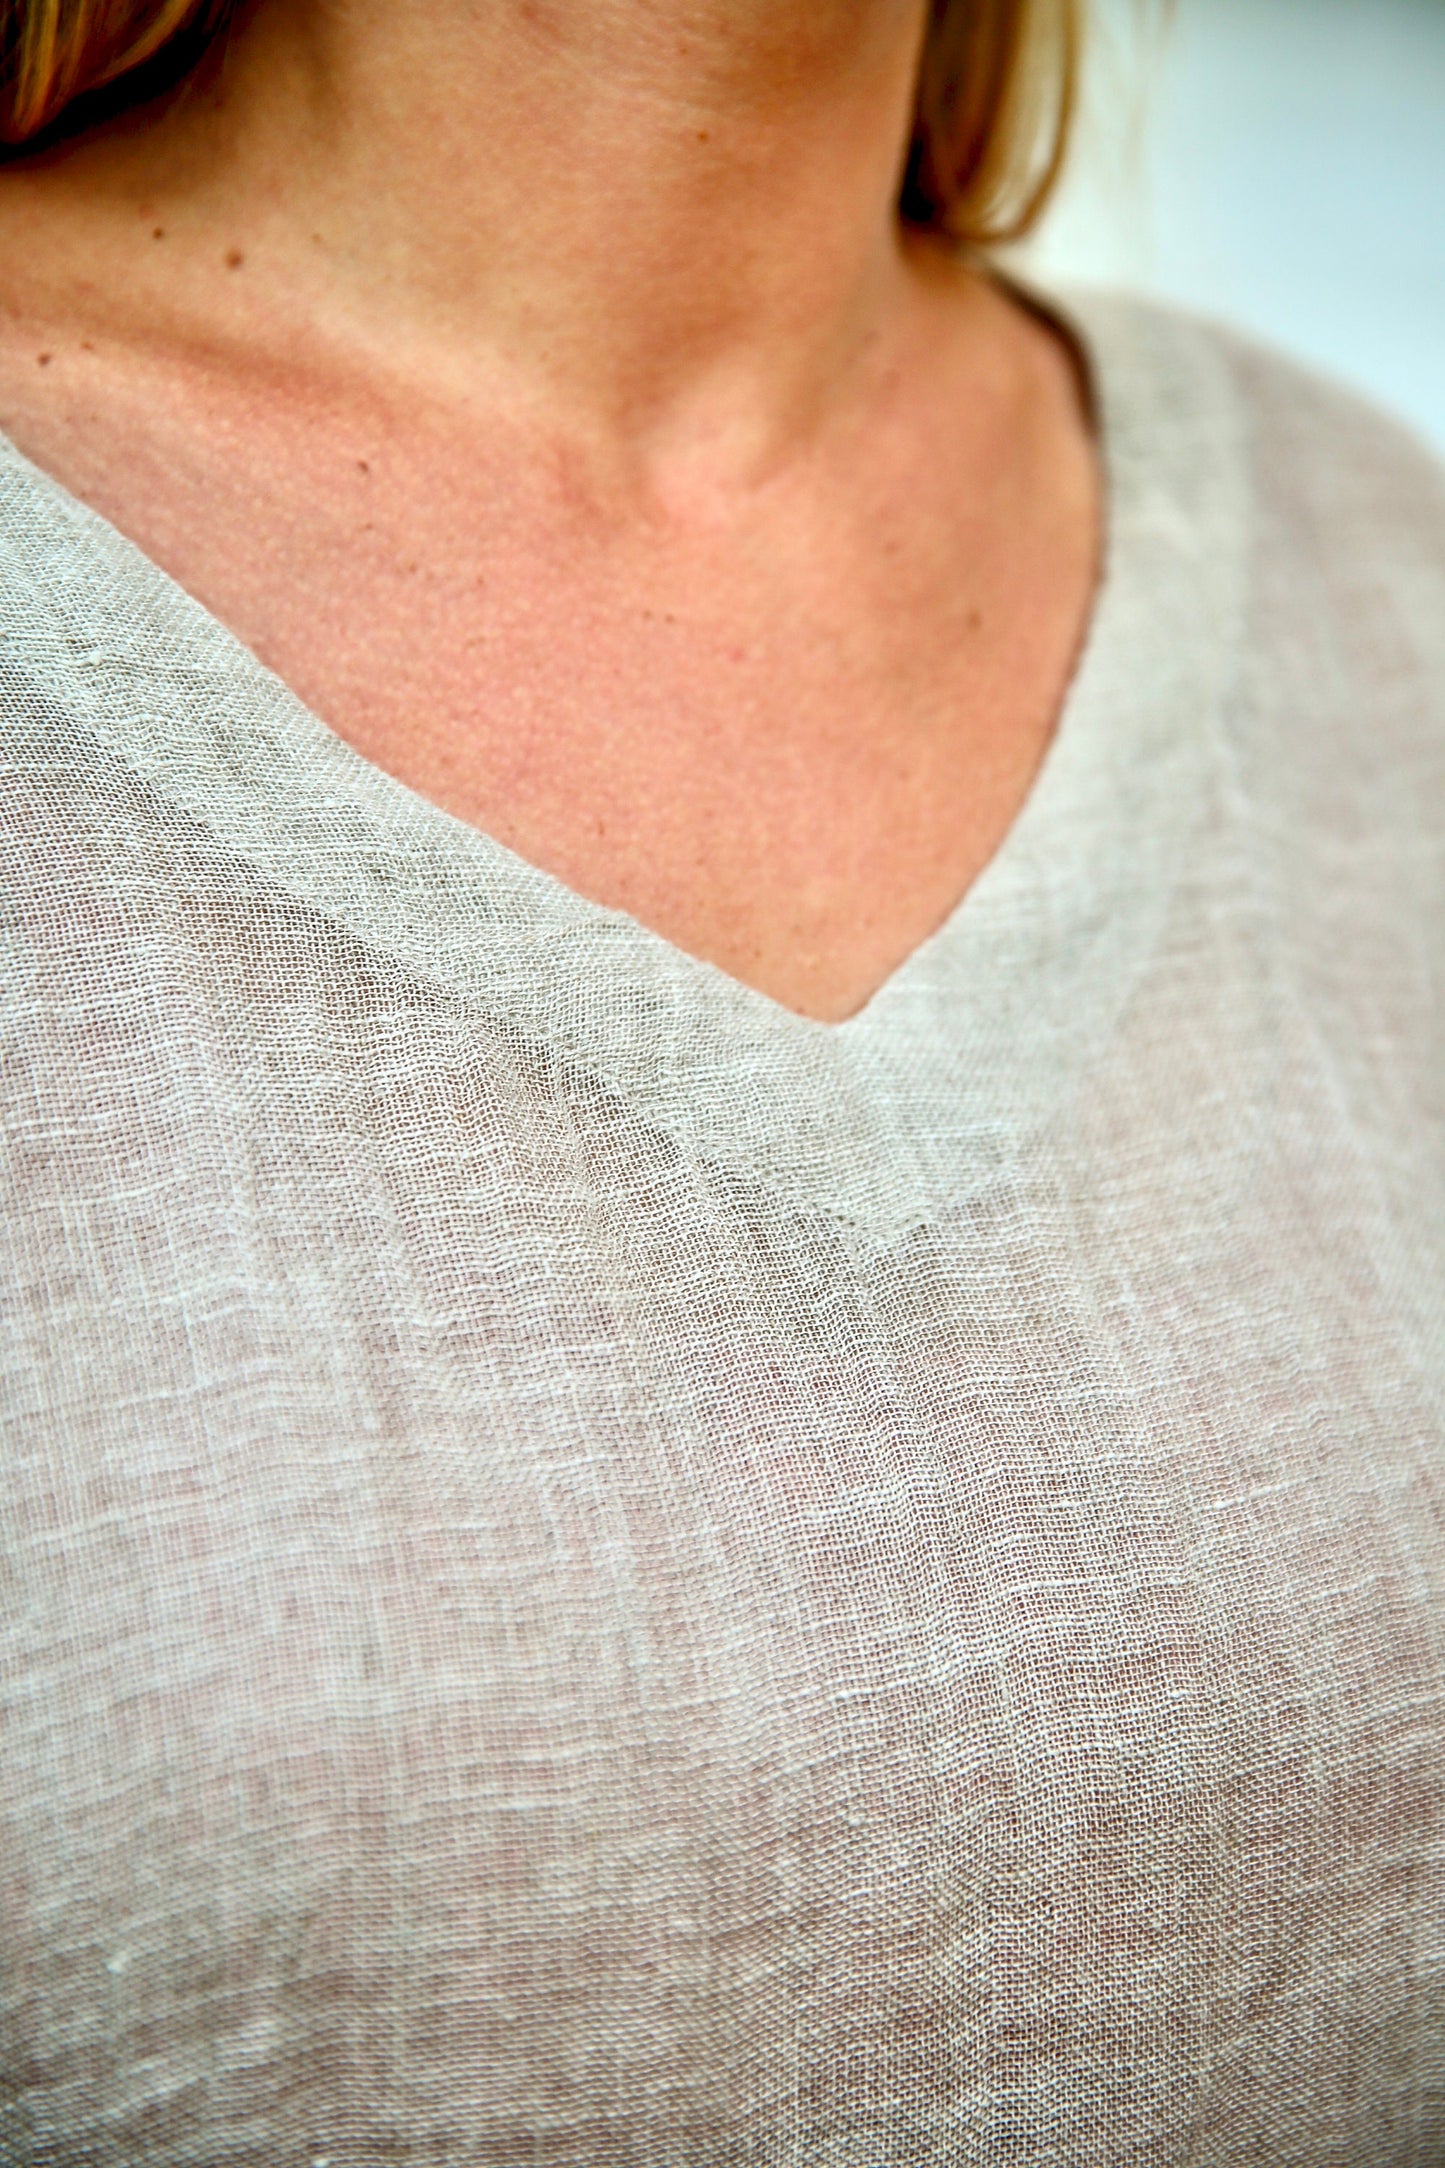 Linen Sheer( Gauze) Cover Up | V-Neck Sheer Loose Linen Tunic Top | Linen Sheer Beach Dress